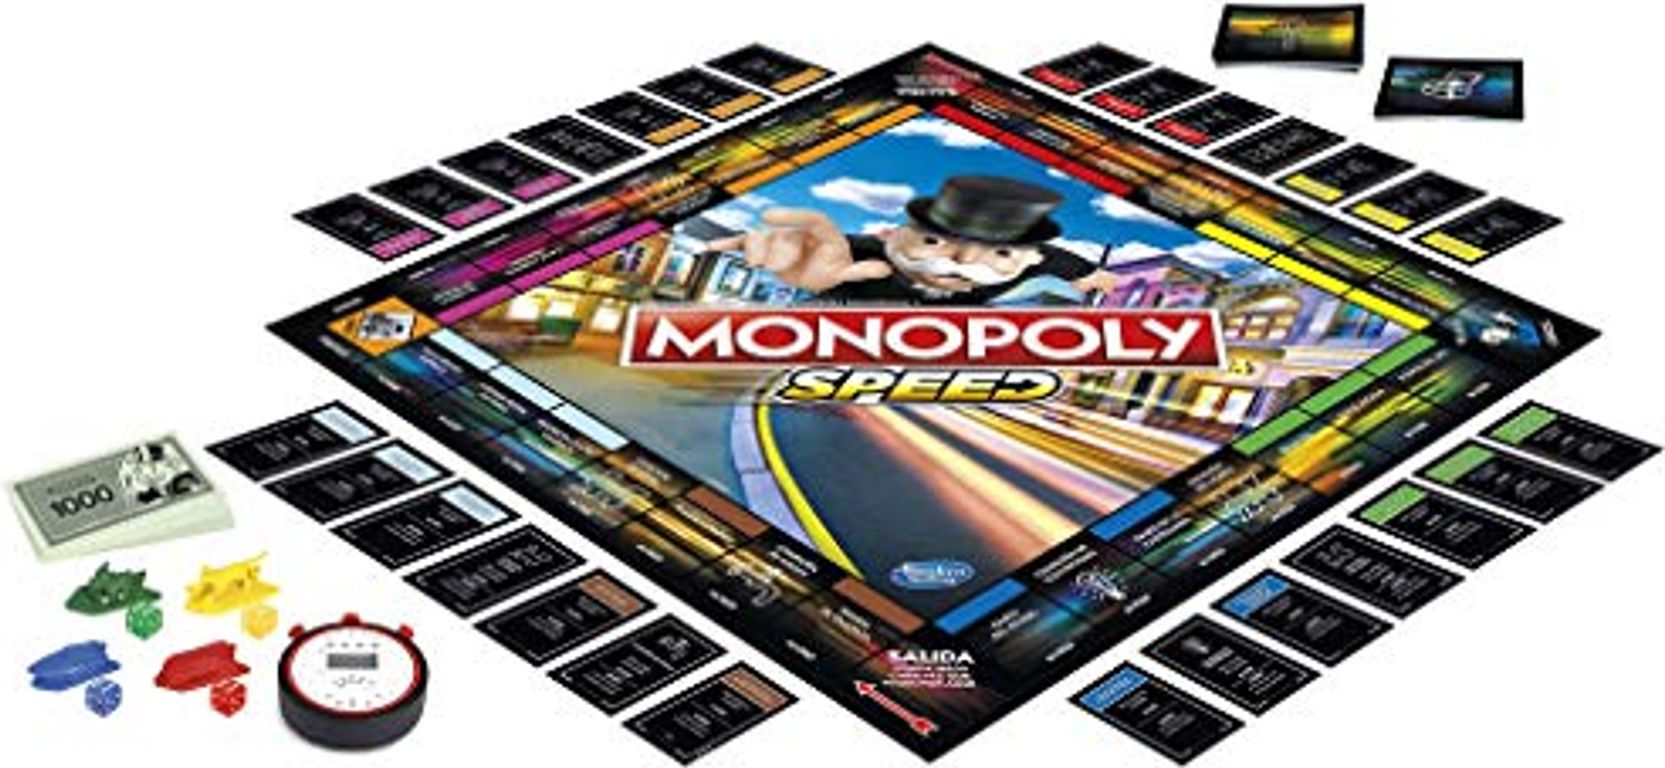 Monopoly Speed composants